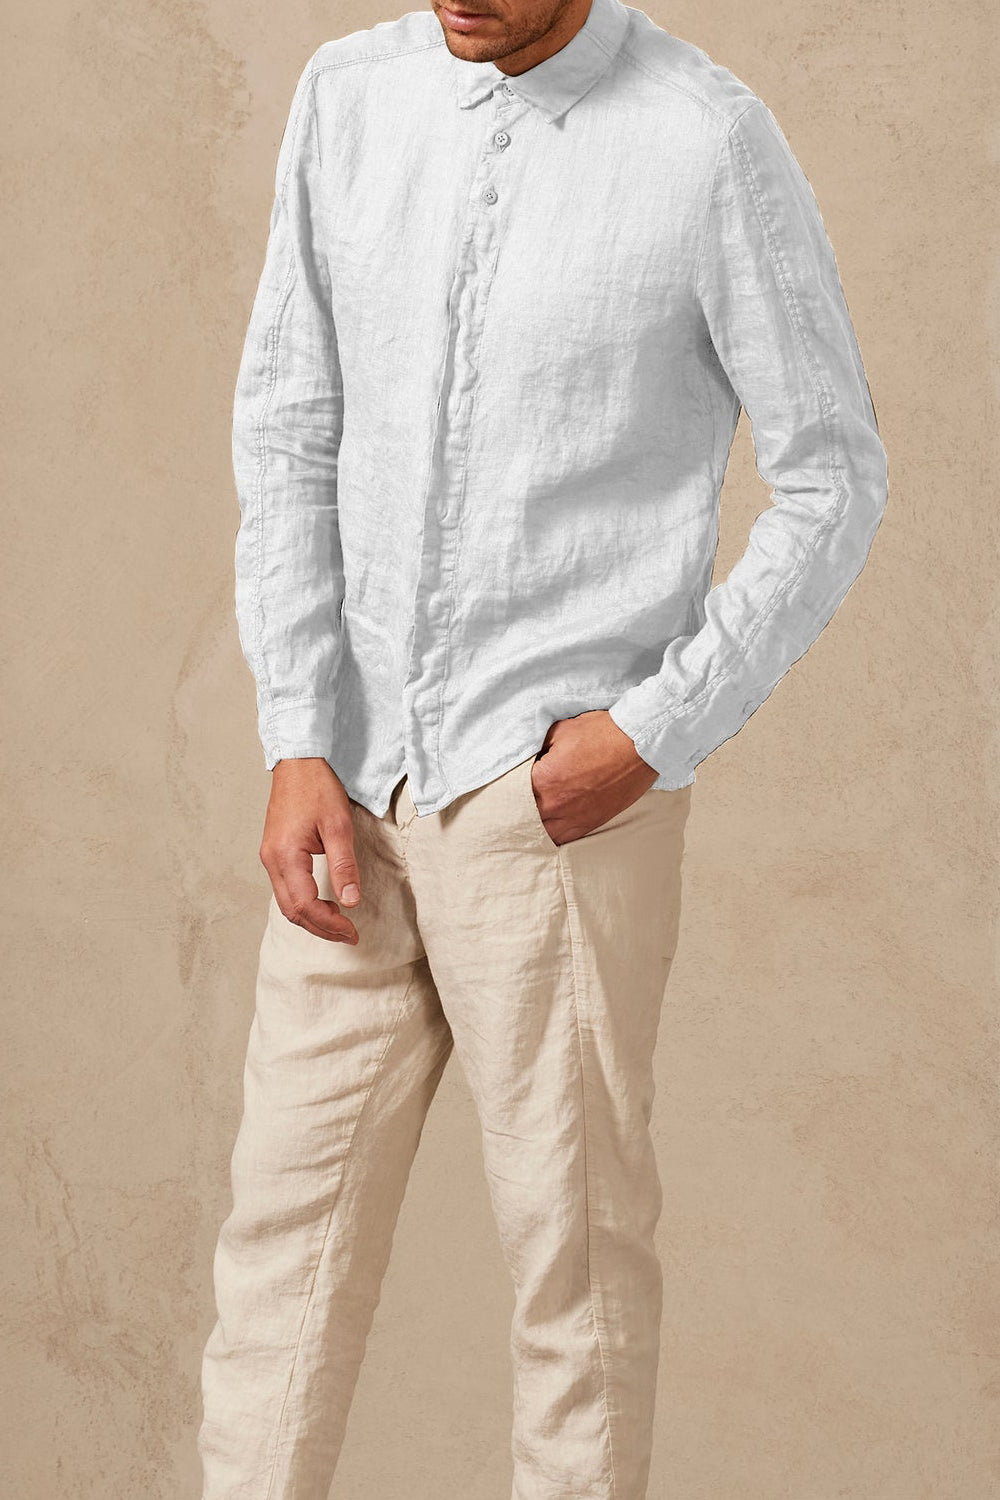 TRANSIT Button Down Shirt in Optical White